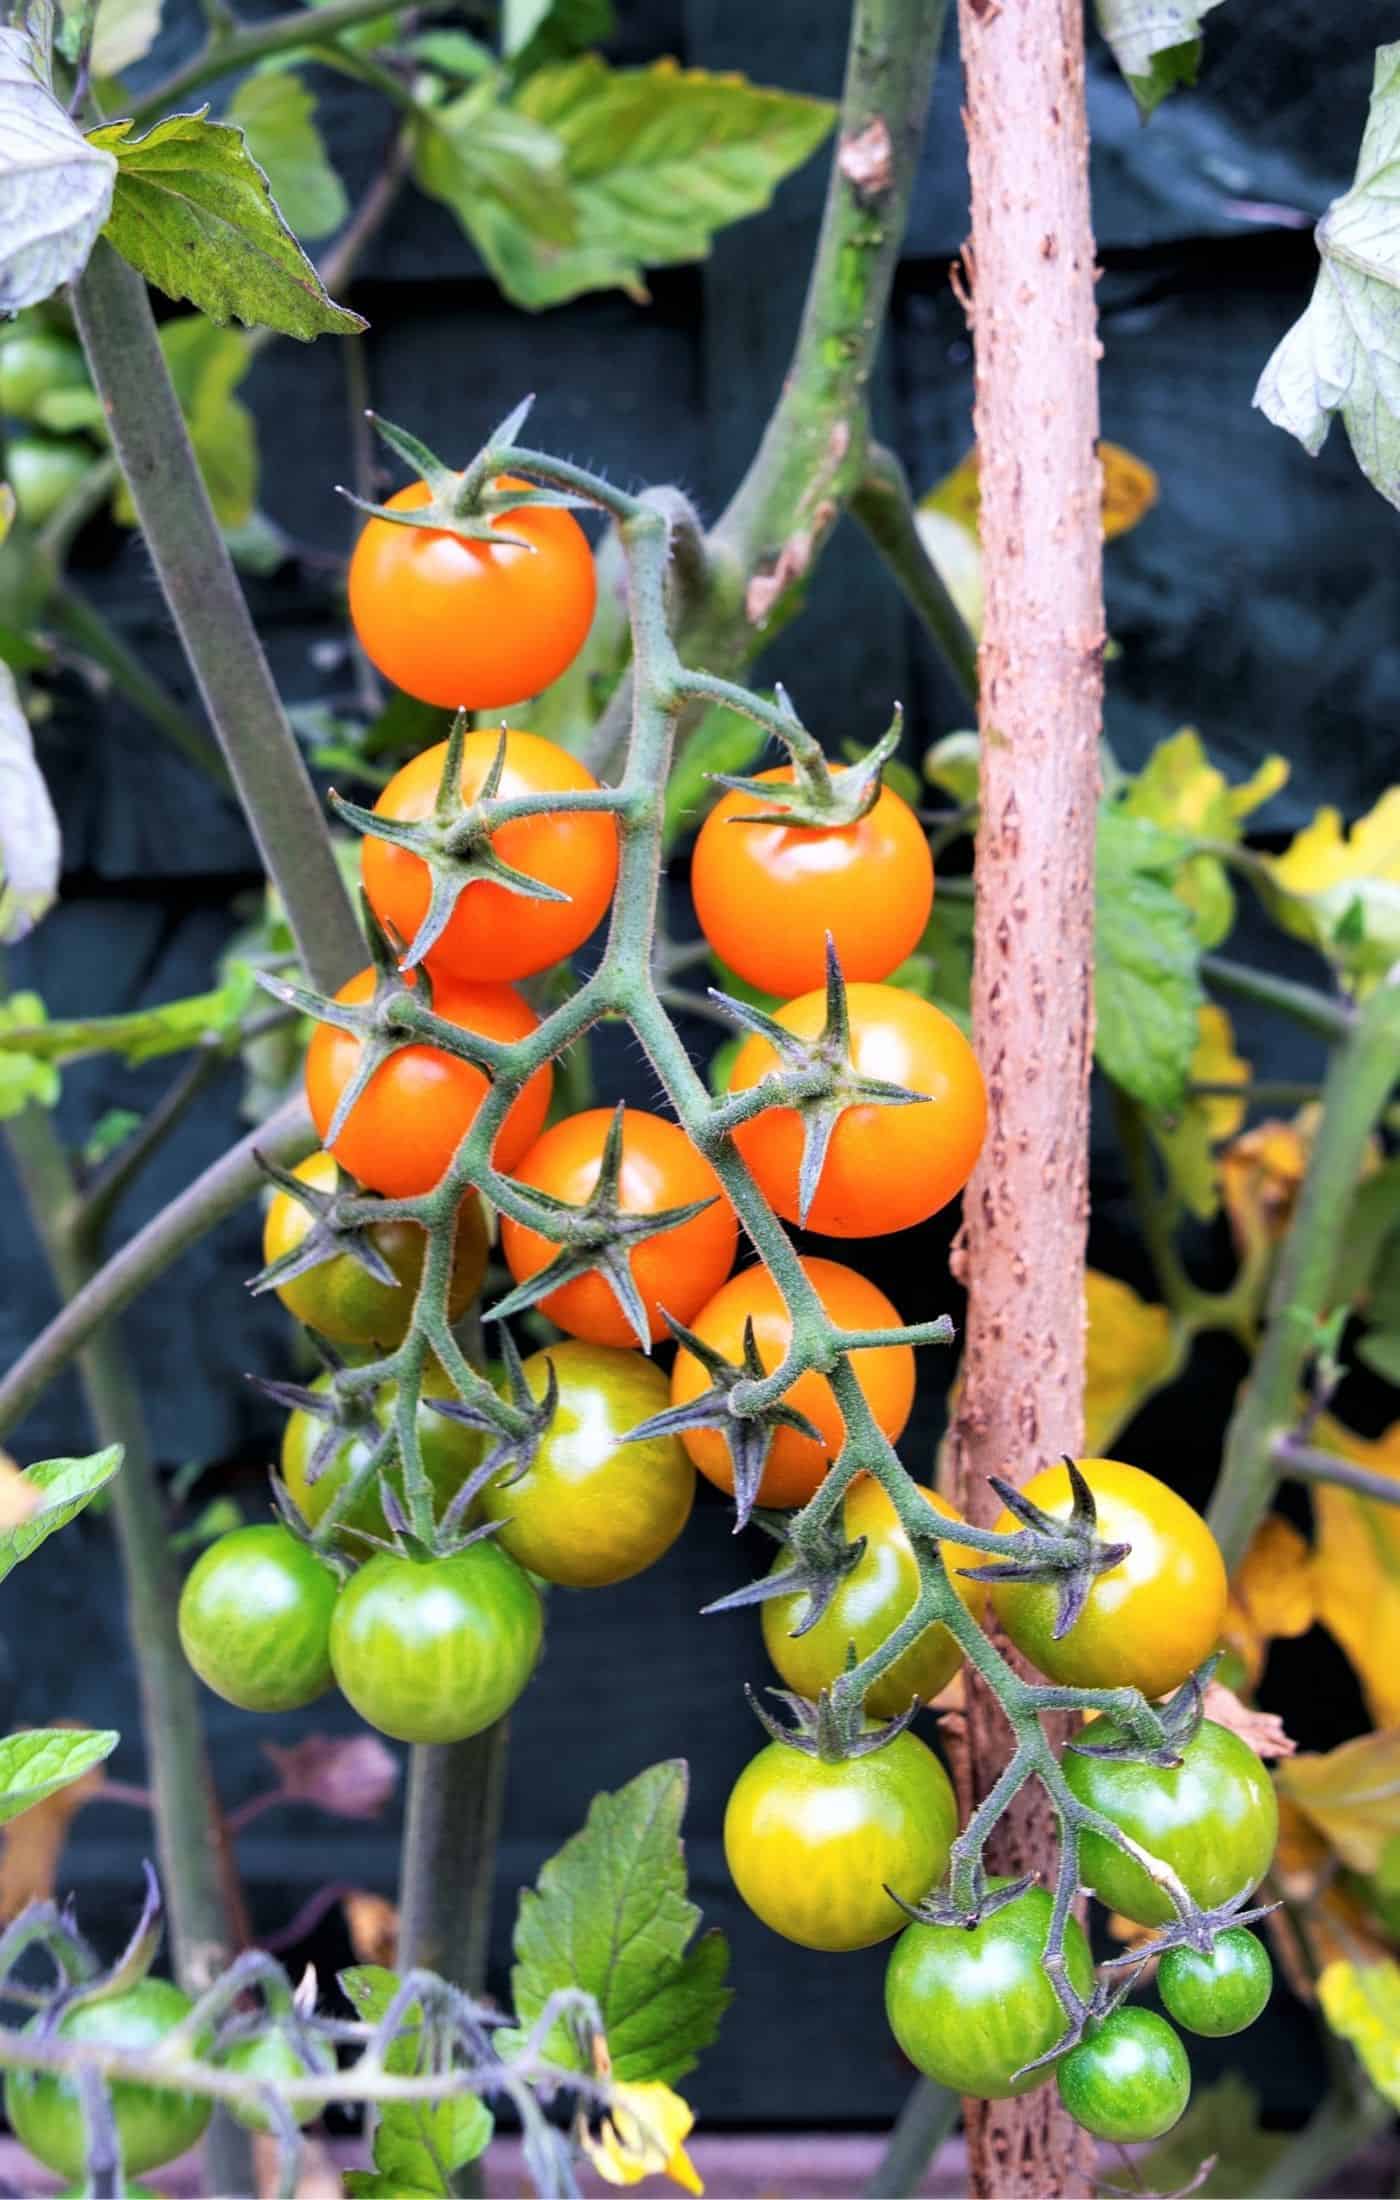 Growing Sun Sugar Tomatoes